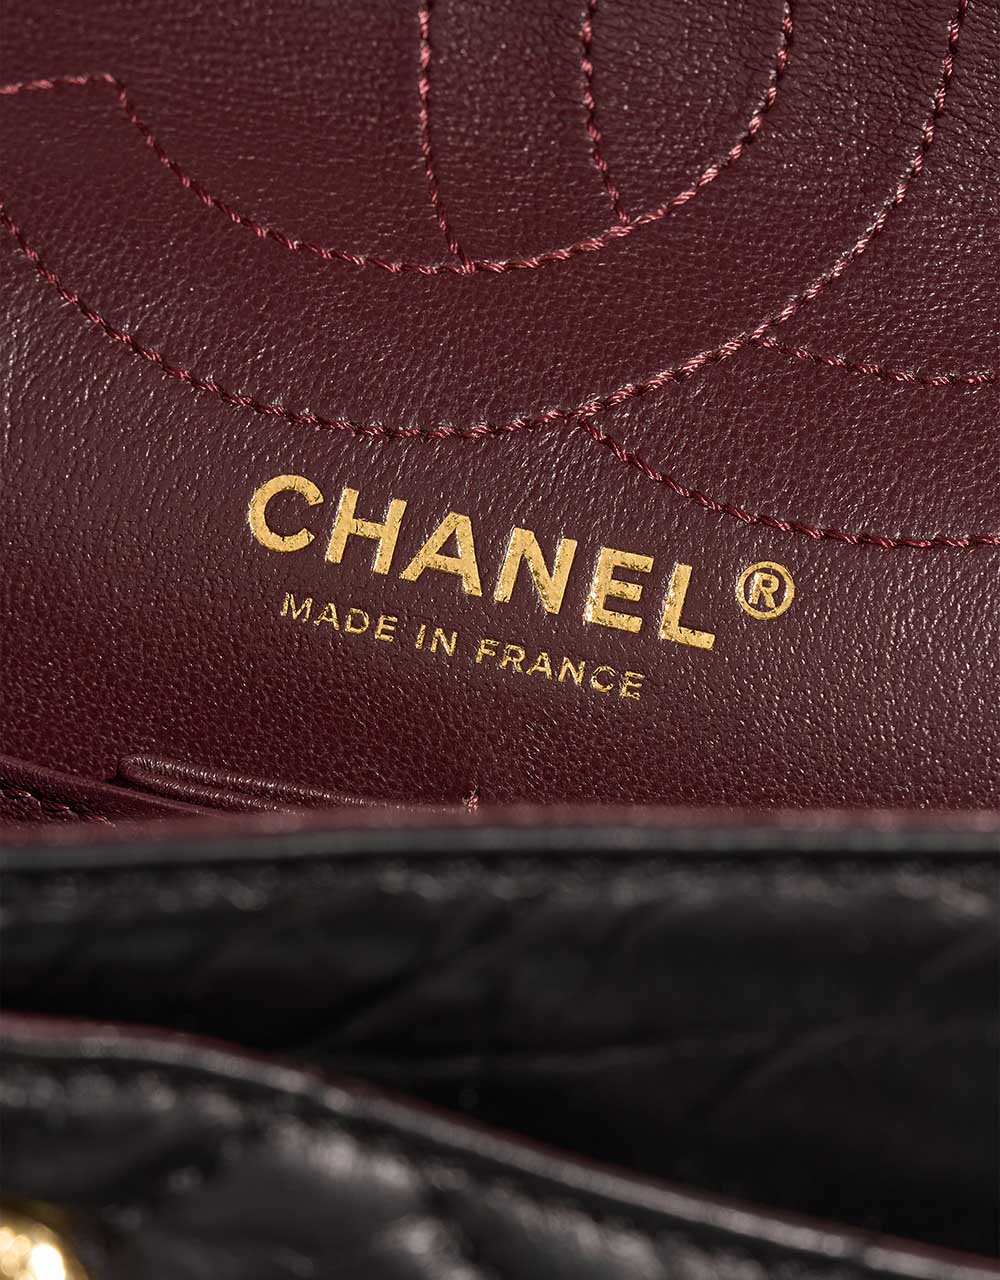 Chanel 255 226 Black Logo  | Sell your designer bag on Saclab.com